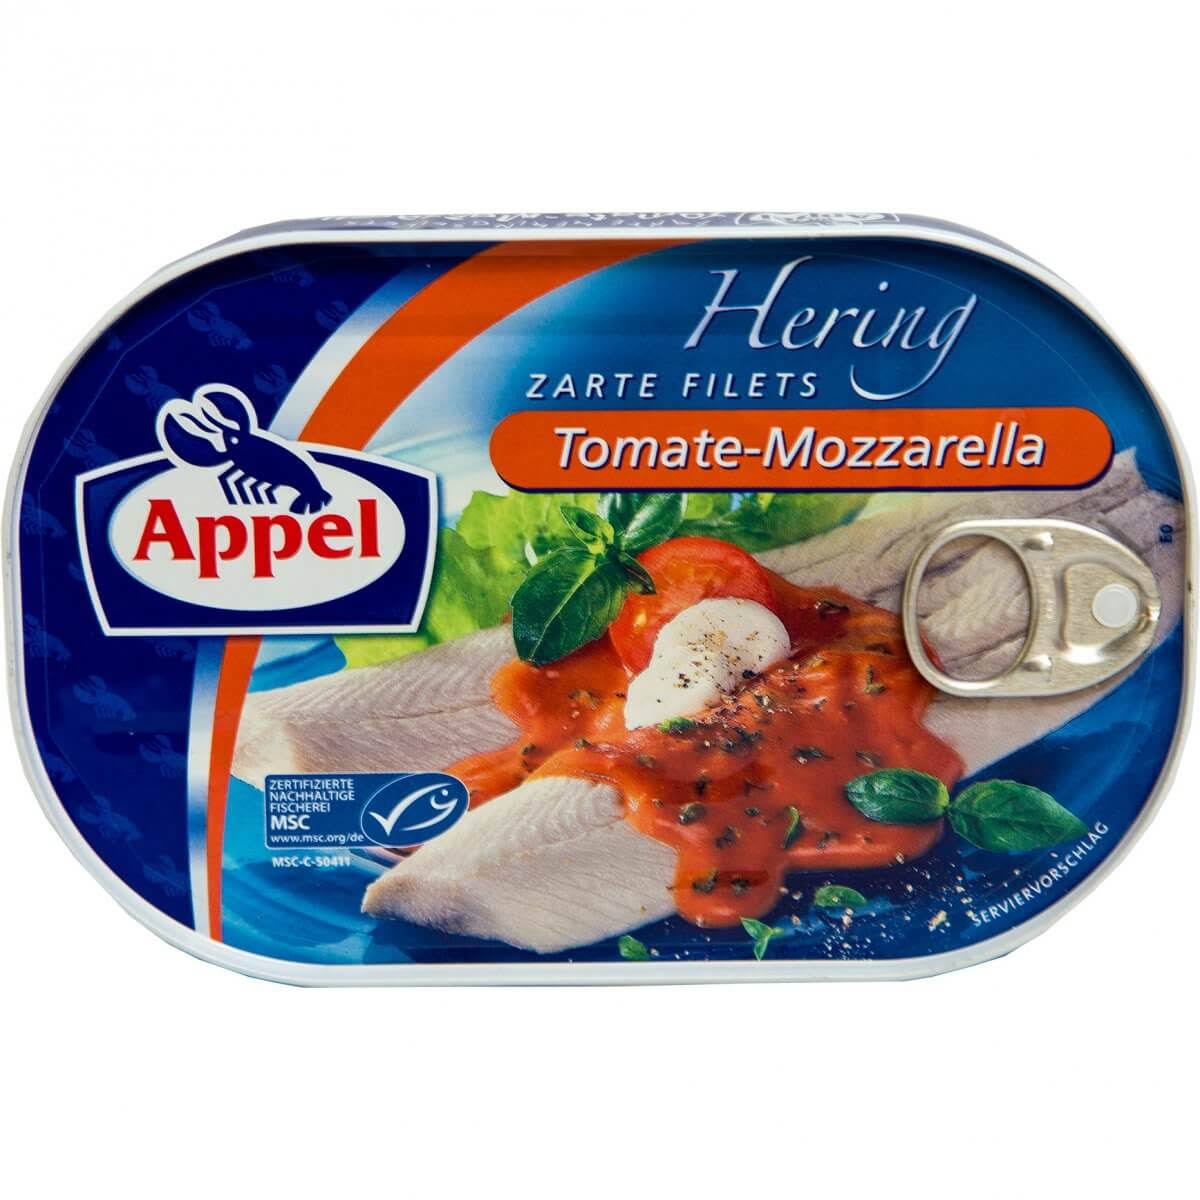 Appel Herring Zarte Filets Tomate-Mozzarella 200g